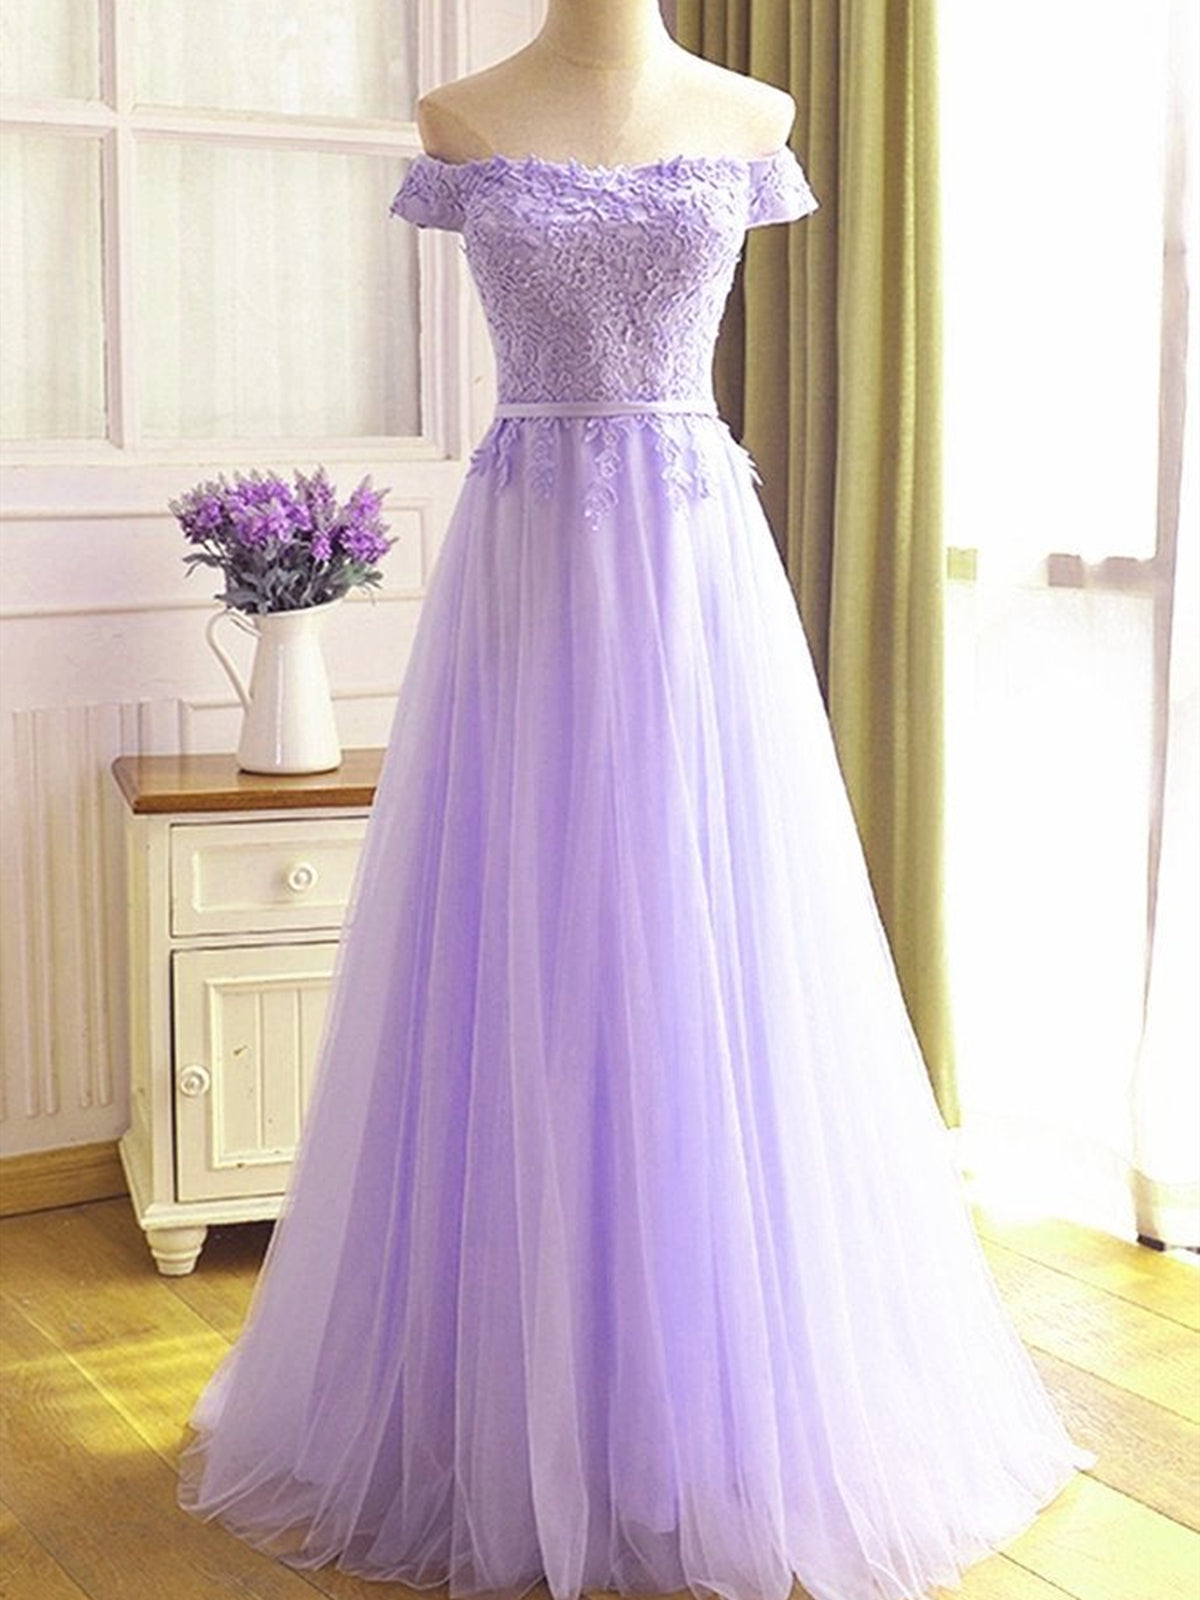 Off the Shoulder Purple Lace Prom Dresses For Black girls For Women, Purple Off Shoulder Lace Formal Bridesmaid Dresses